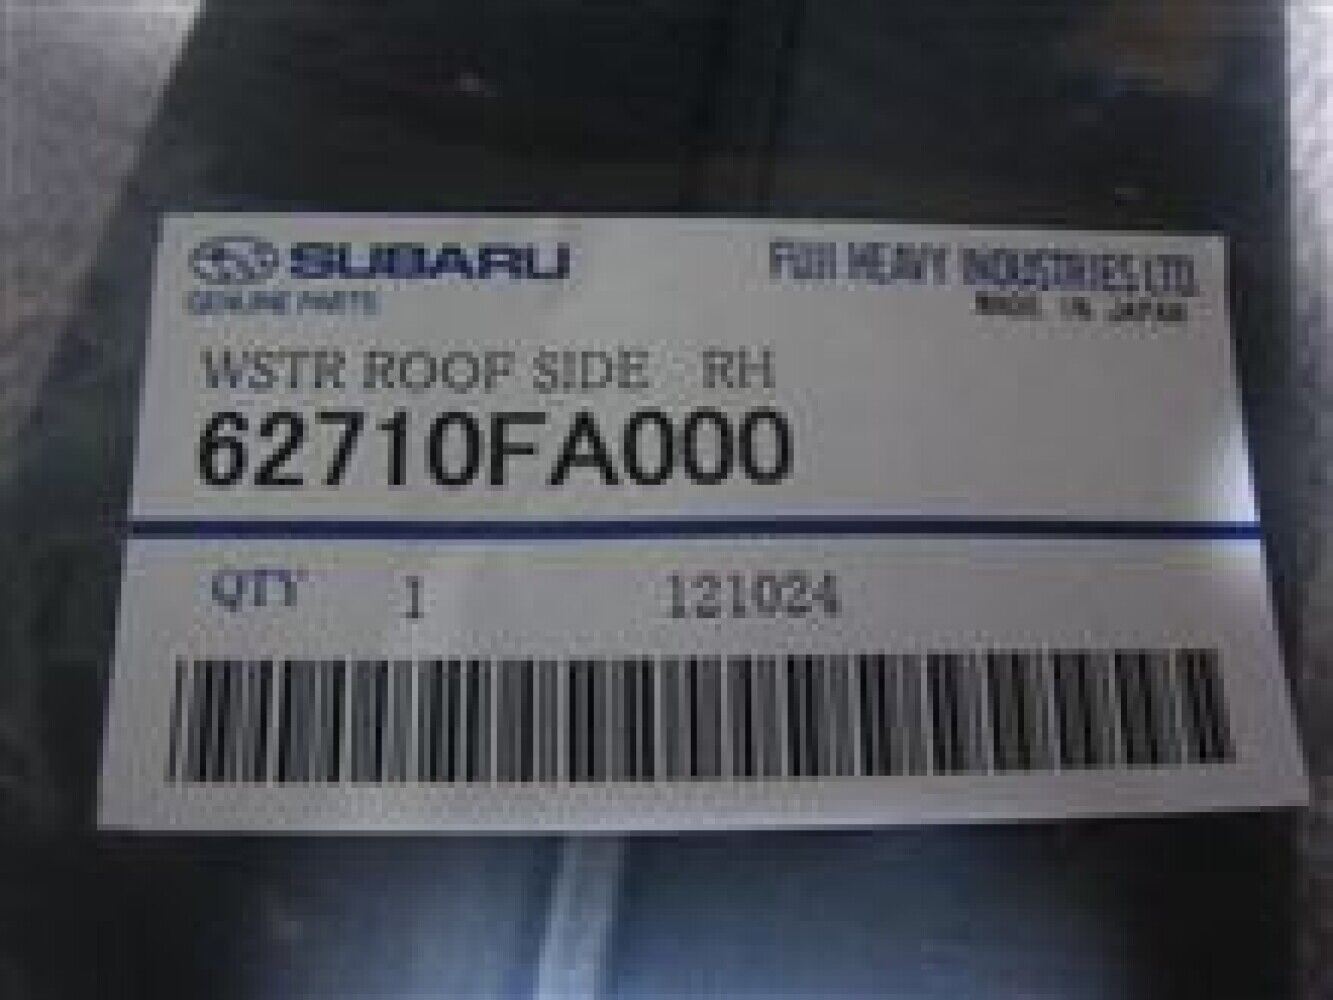 SUBARU Genuine Impreza GC8 WRX STI Right Side Door Weatherstrip Seal 62710-FA000